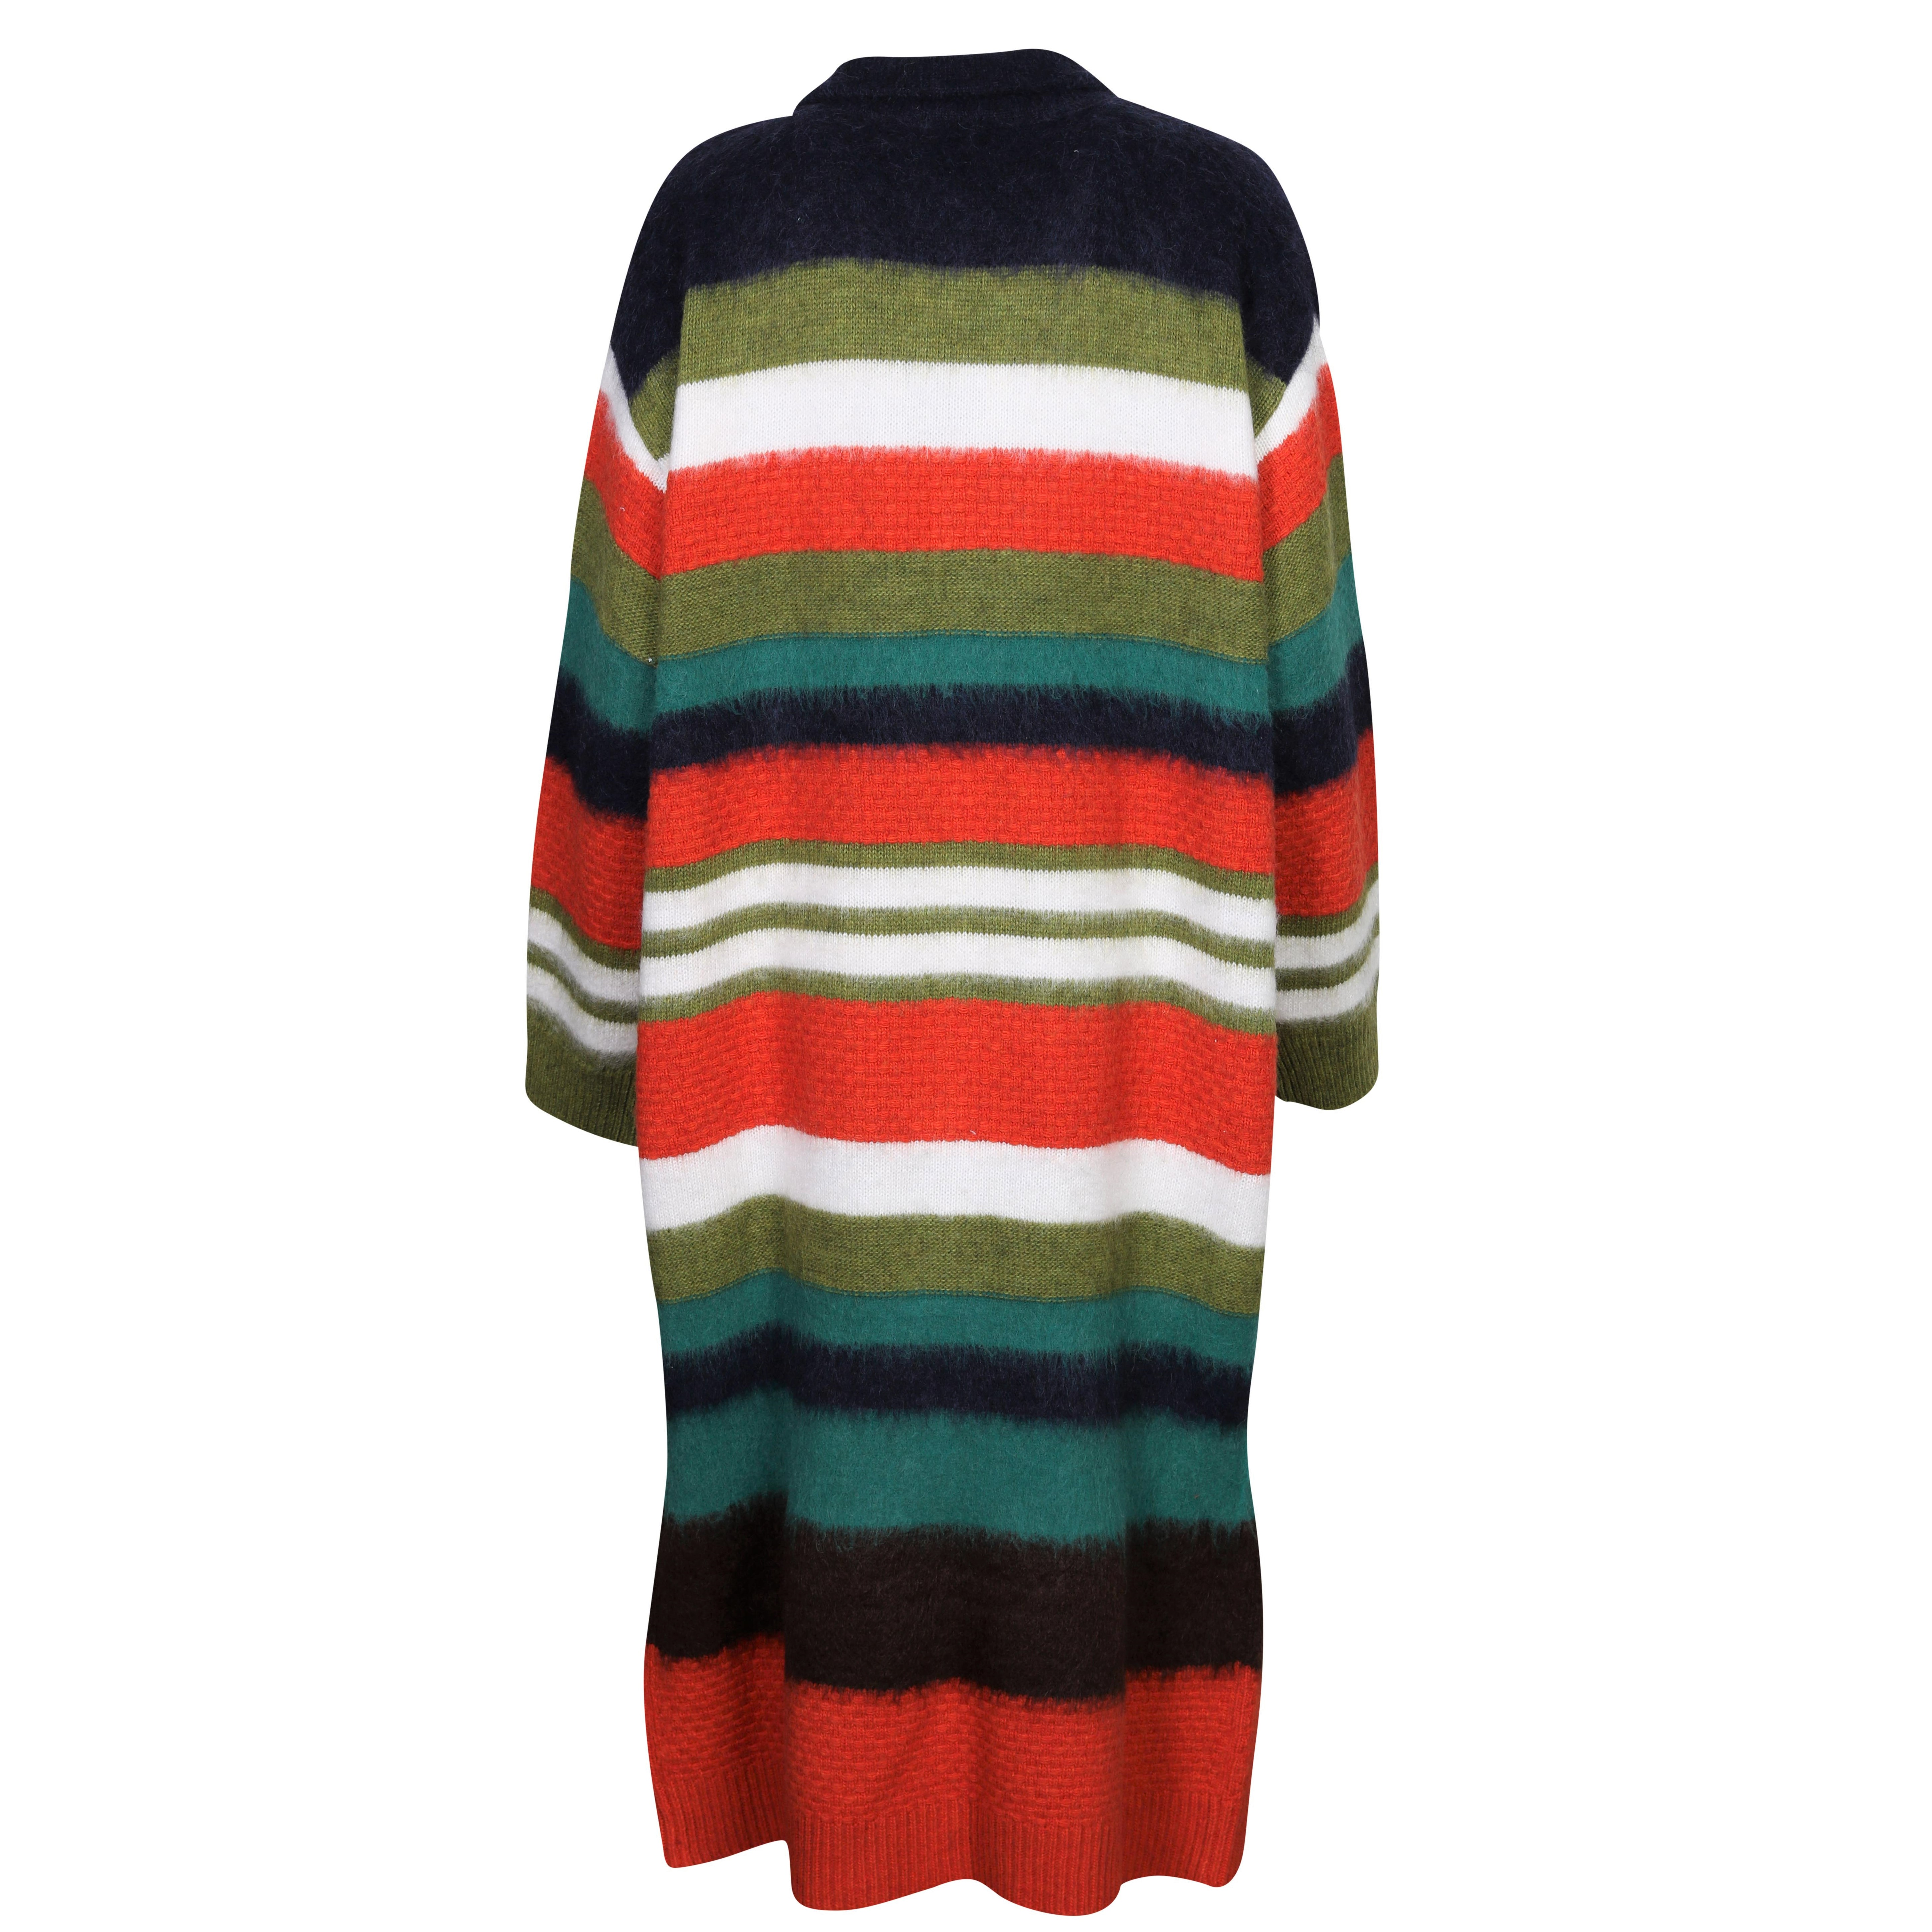 Dsquared2 Knit Coat in Multicolor